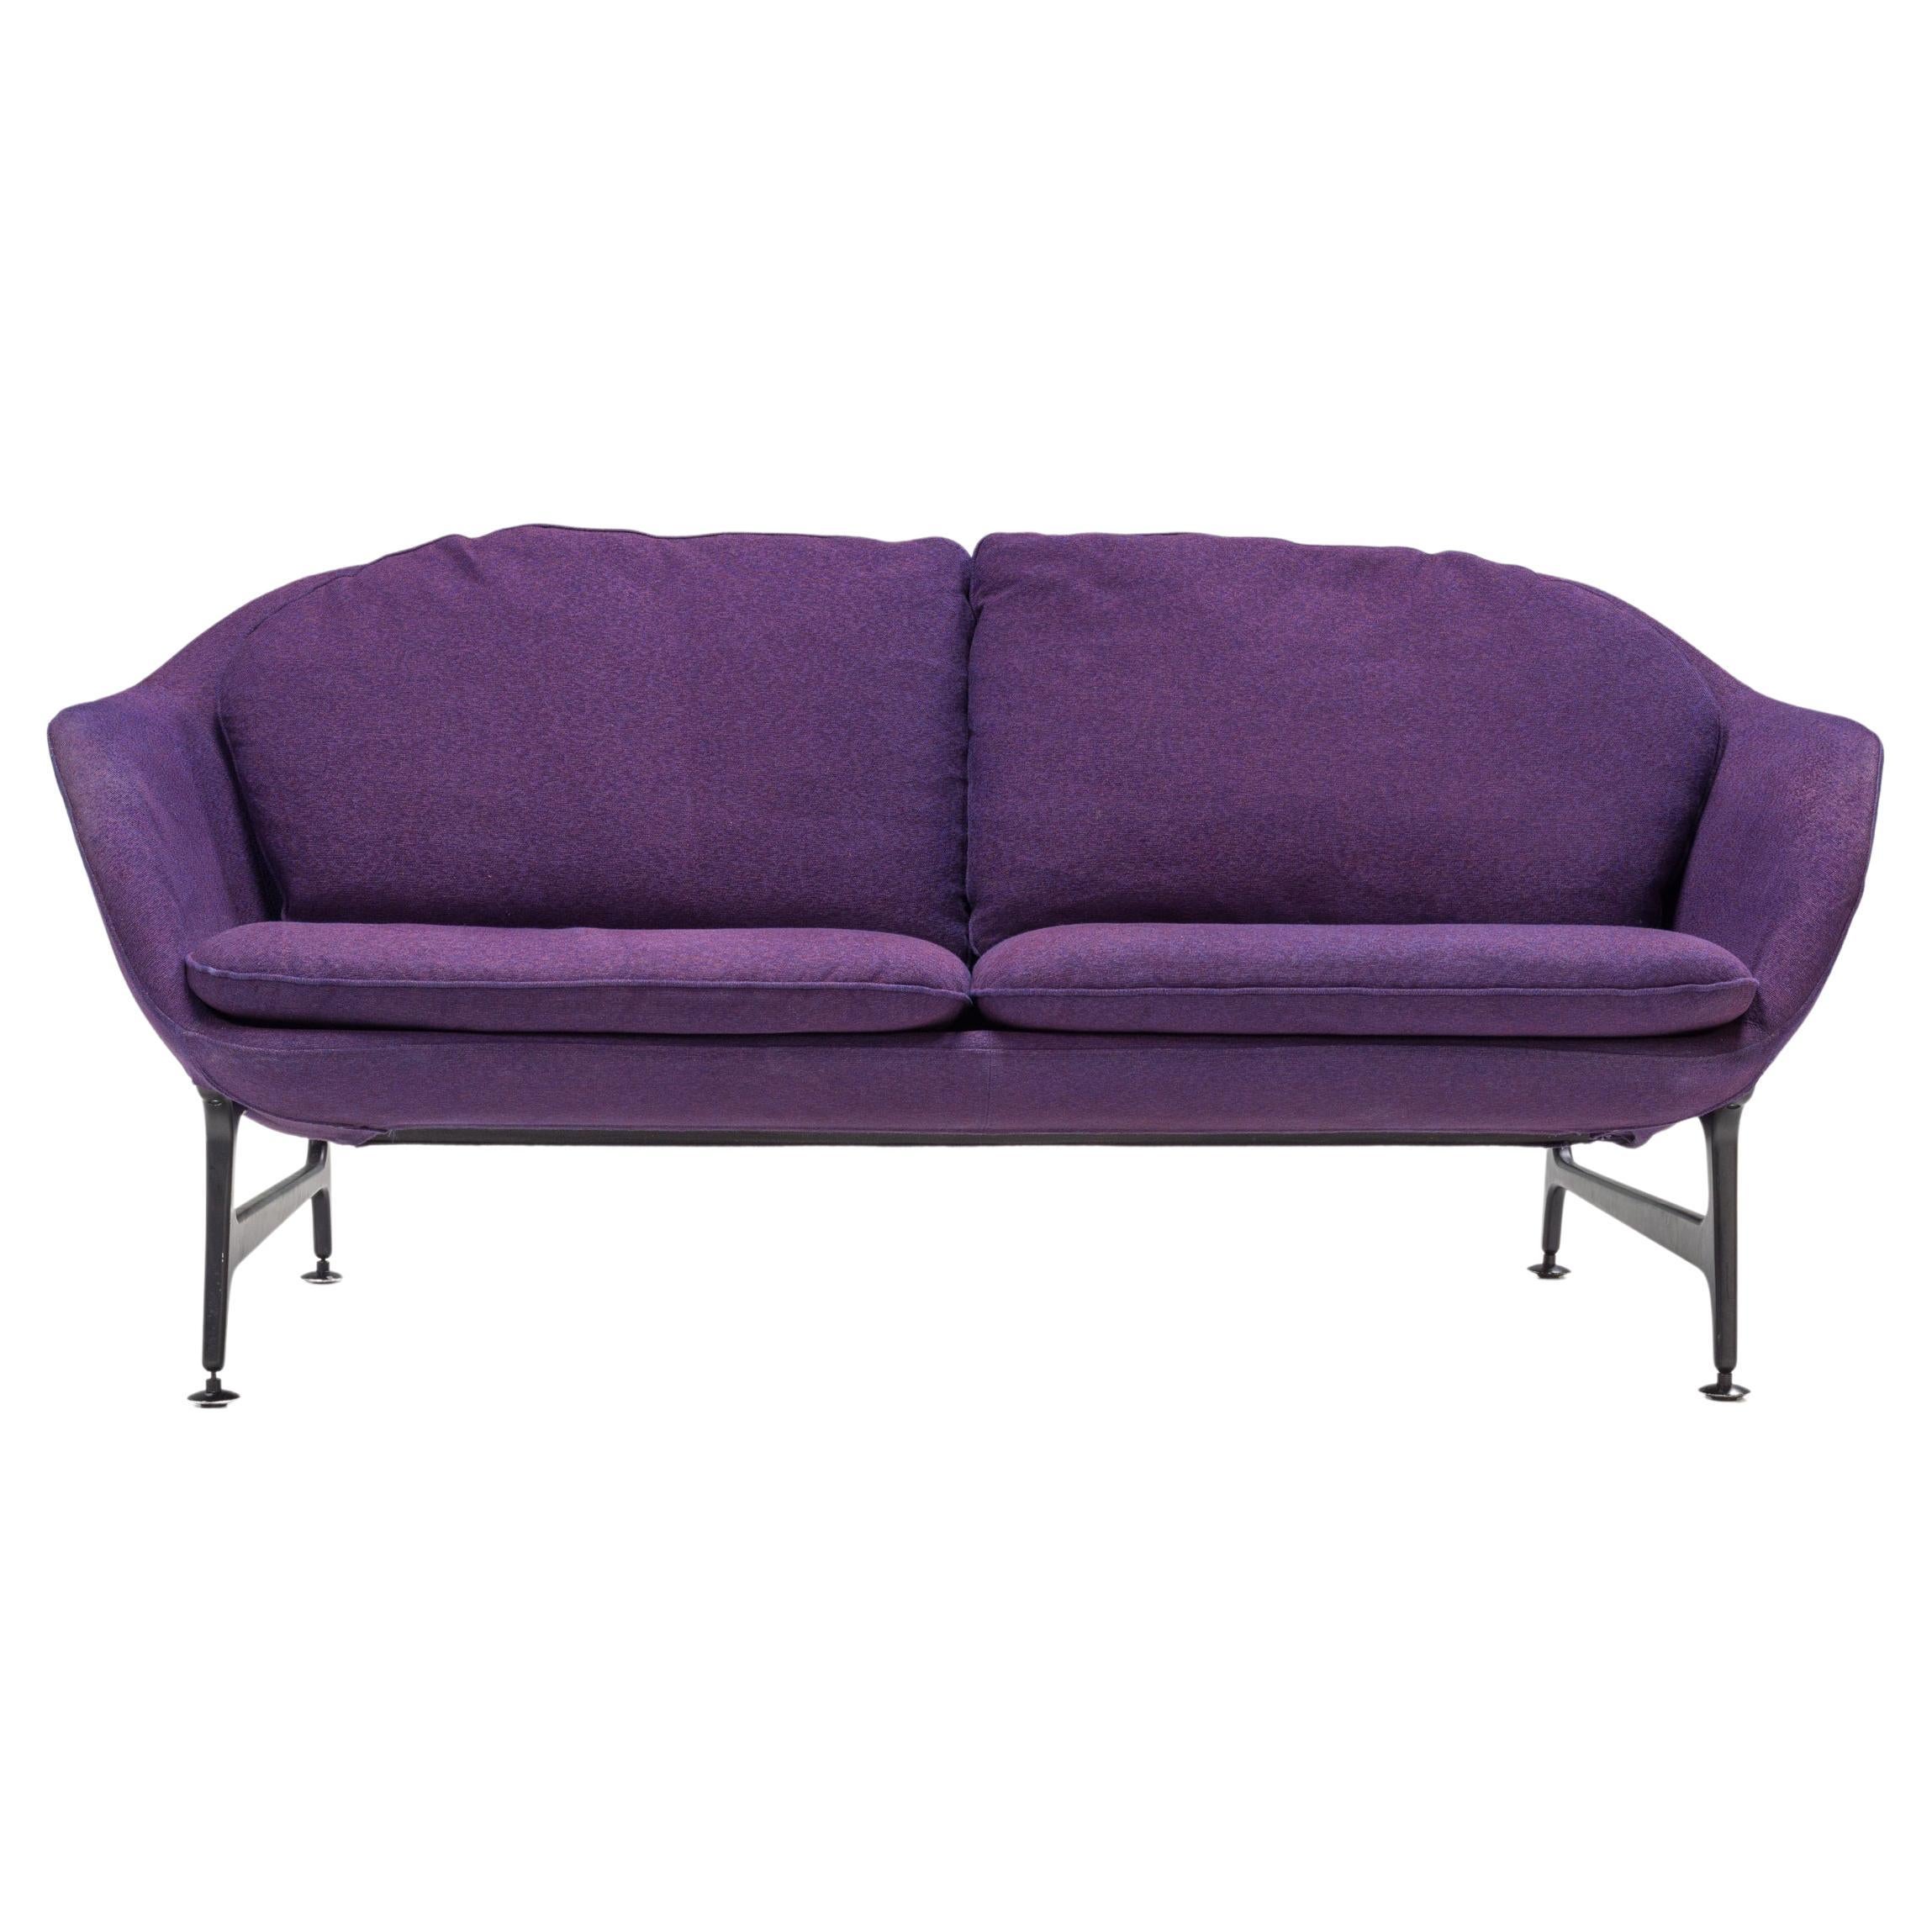 Zweisitzer-Sofa Cassina von Jaime Hayon, Vico, lila